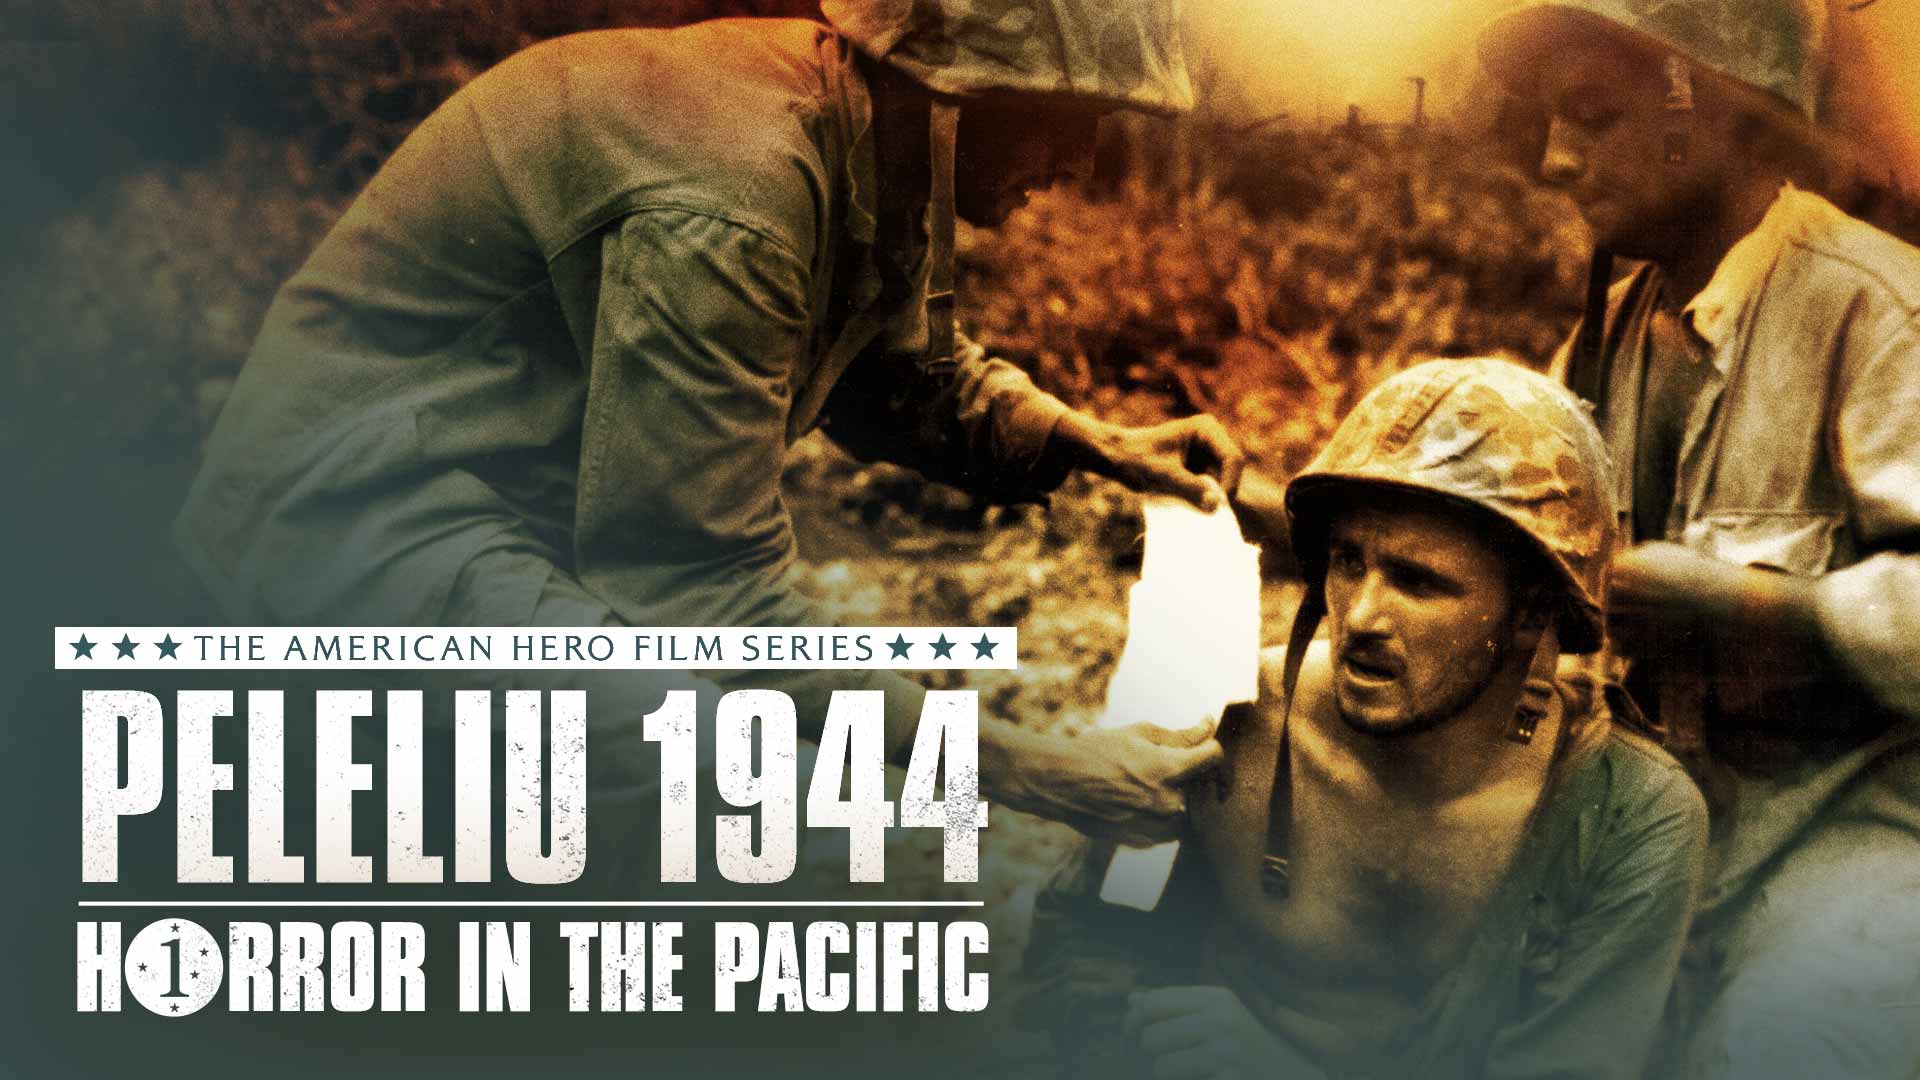 Peleliu 1944: Horror In The Pacific